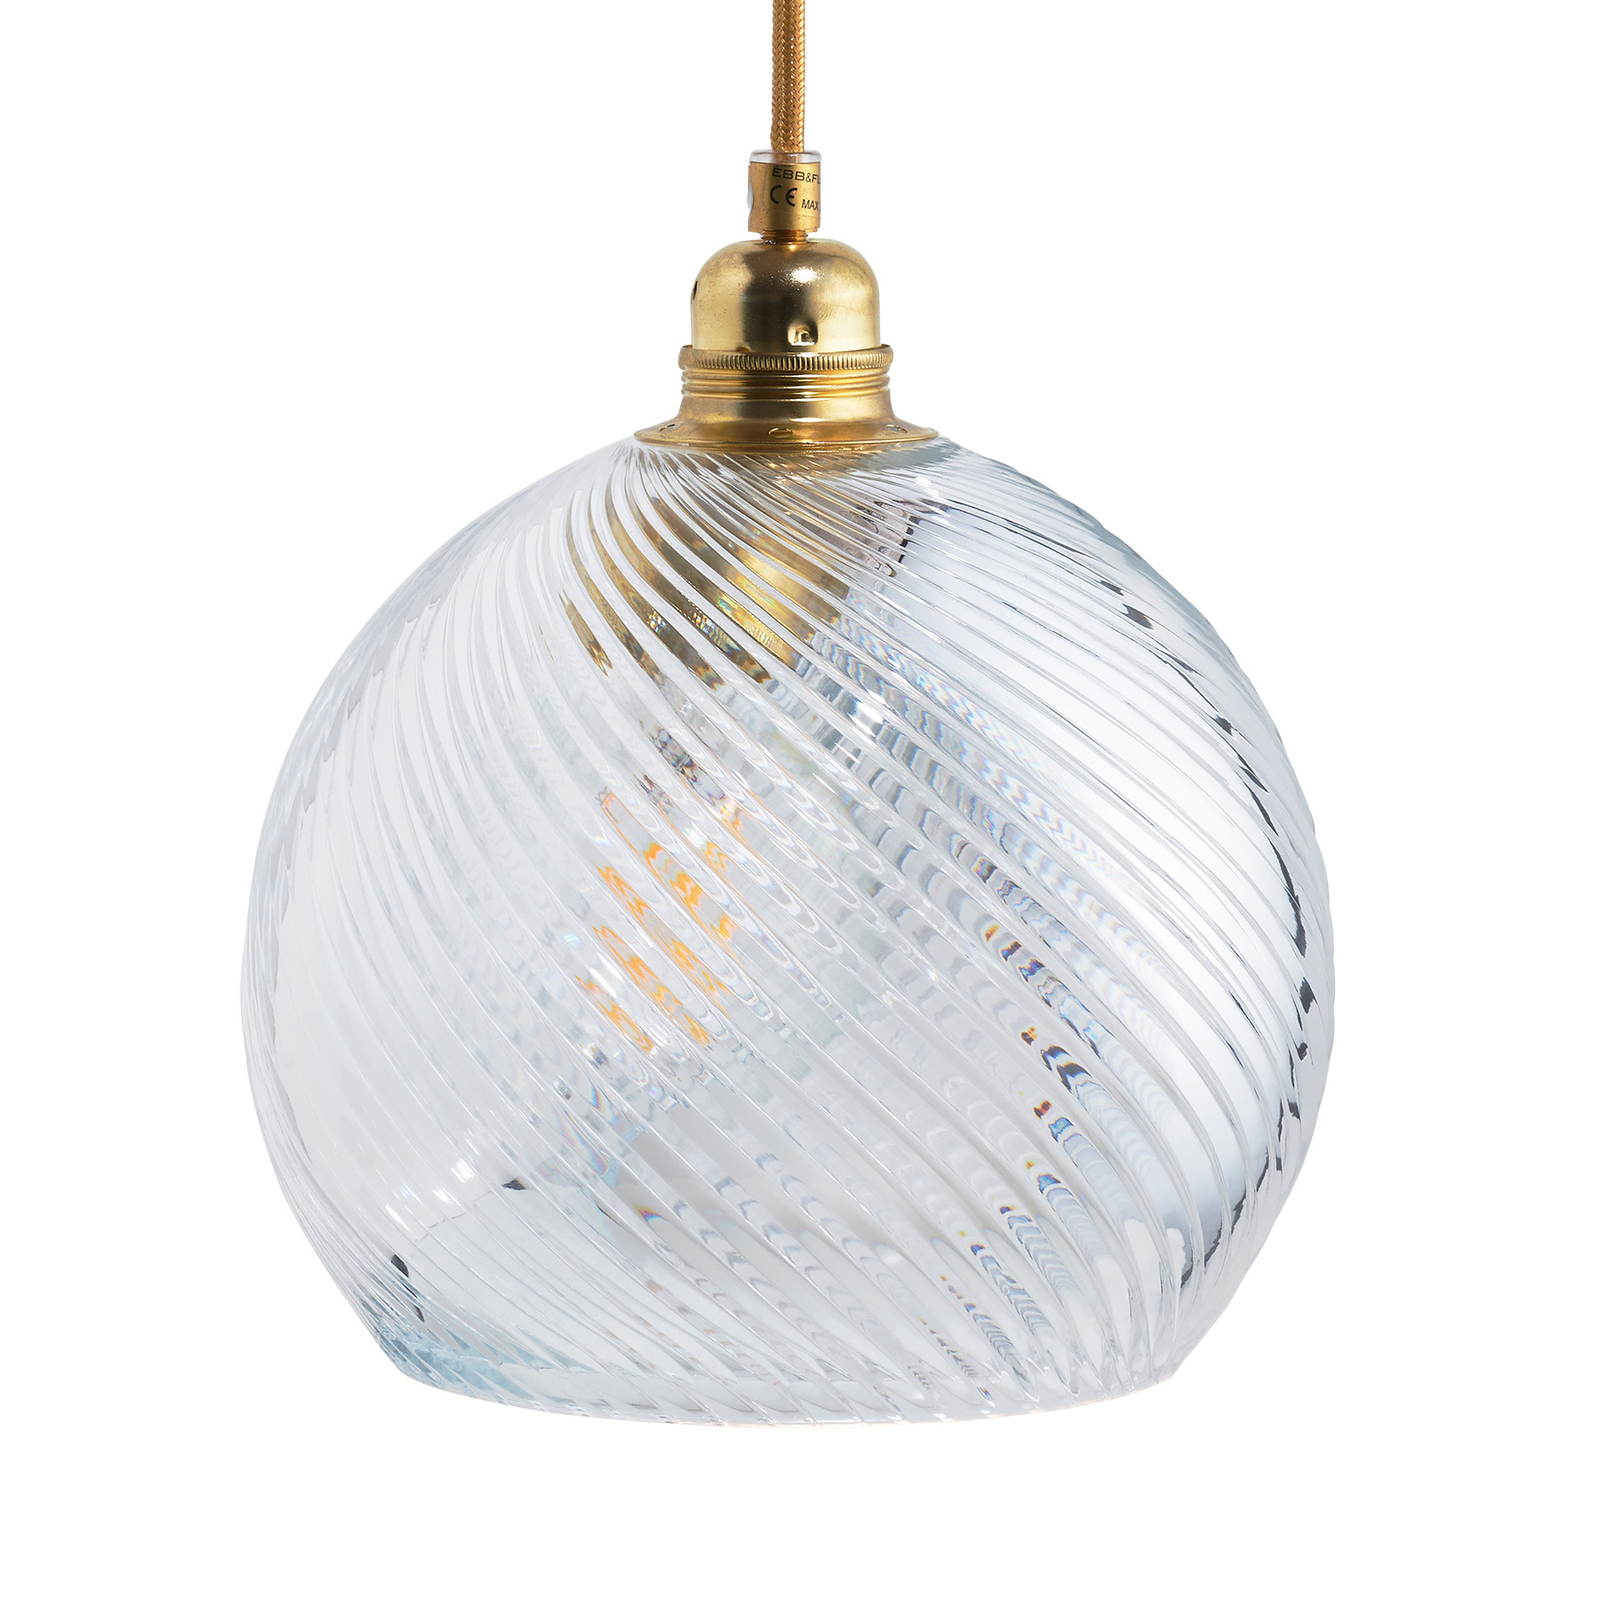 EBB & FLOW Závěsná lampa Rowan zlatá/křišťálová Ø 22 cm